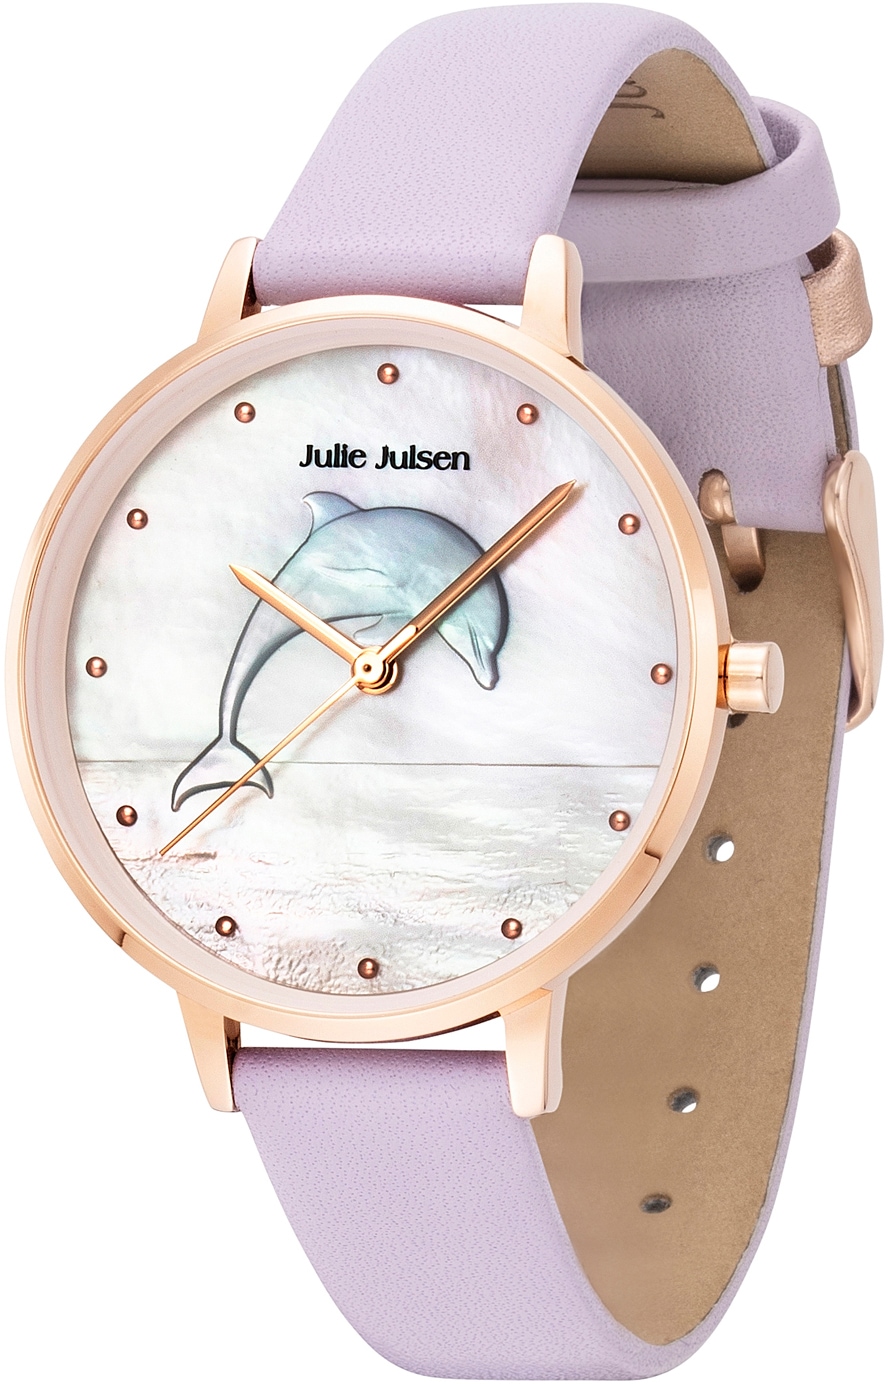 Julie Julsen Quarzuhr »Dolphin Lilac, JJW1008RGL-01«, Armbanduhr, Damenuhr, Delfin, Delphin, gehärtetes Mineralglas